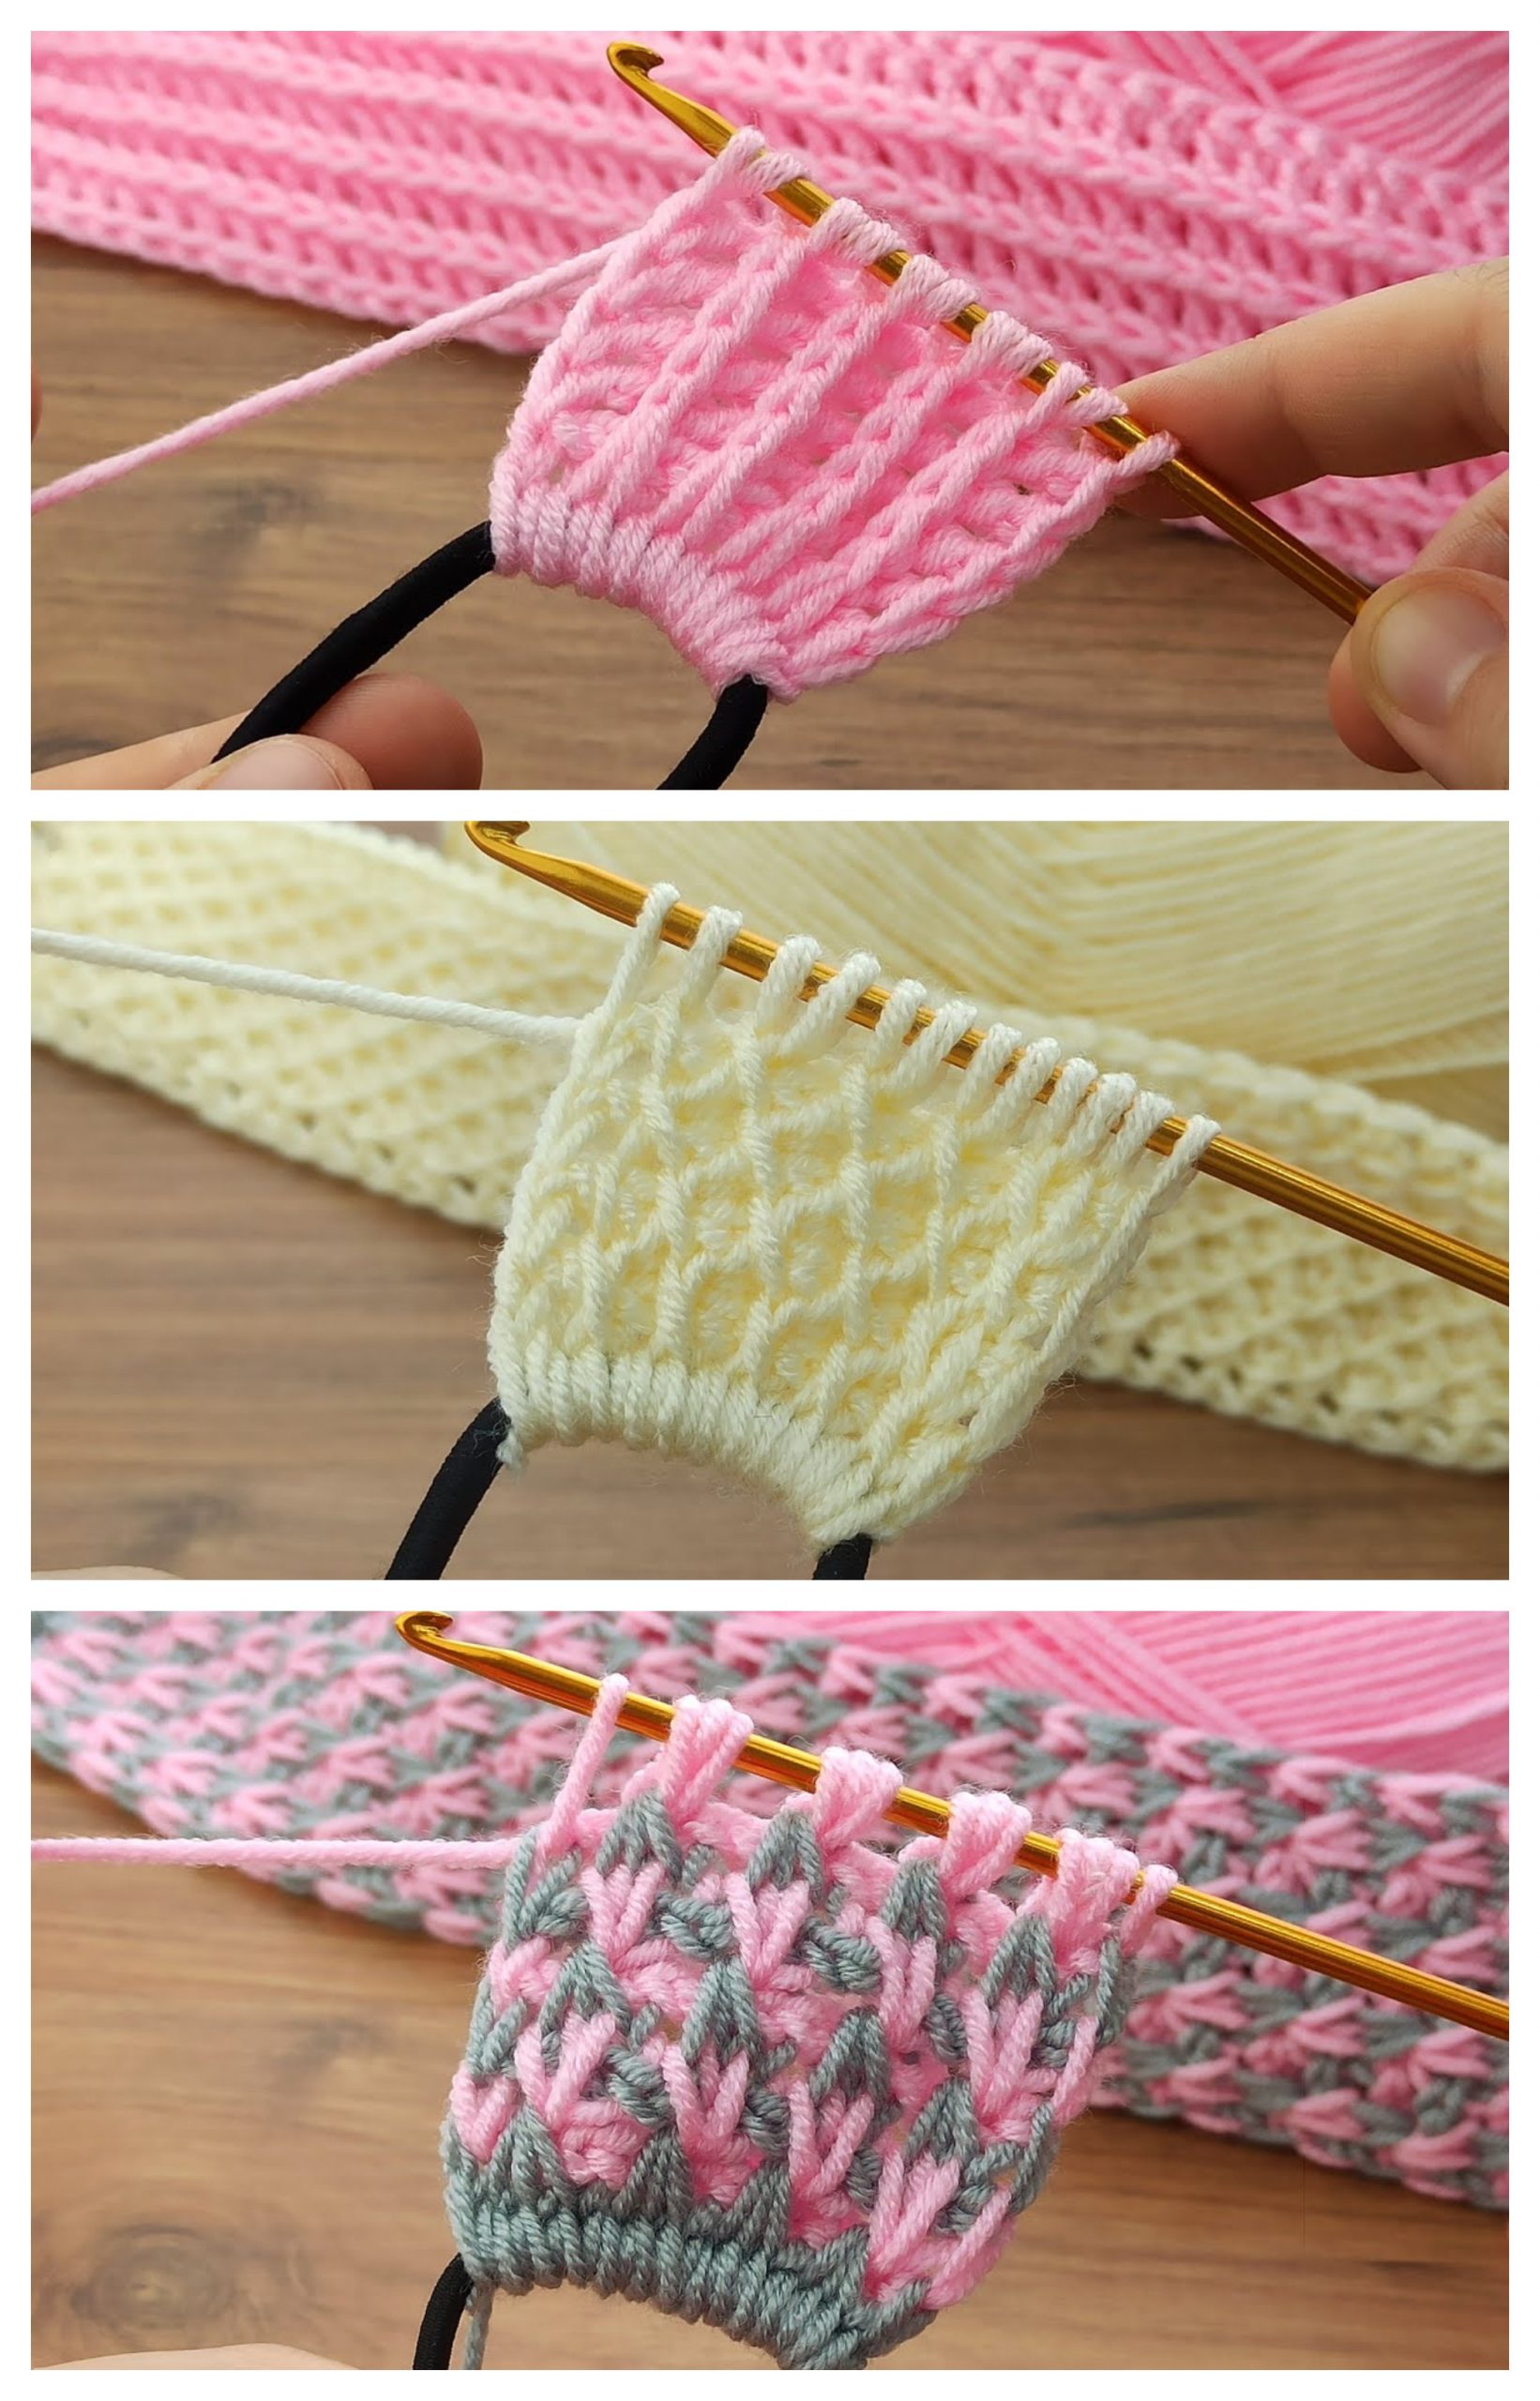 Crochet Tunisian Stitches – Simply ‘Wow’